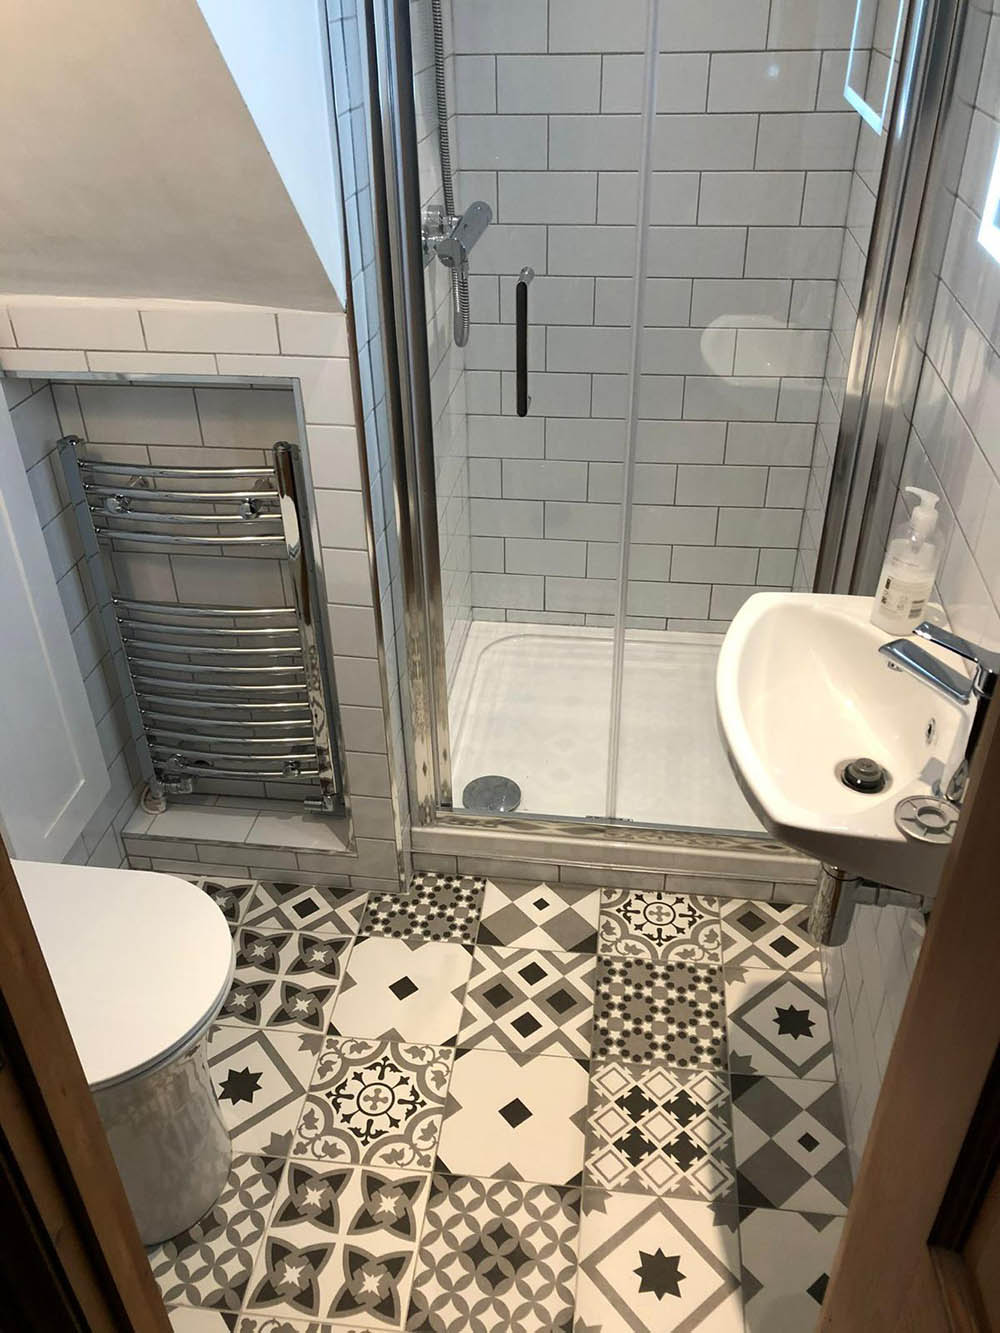 Patterned tile floor of a bathroom